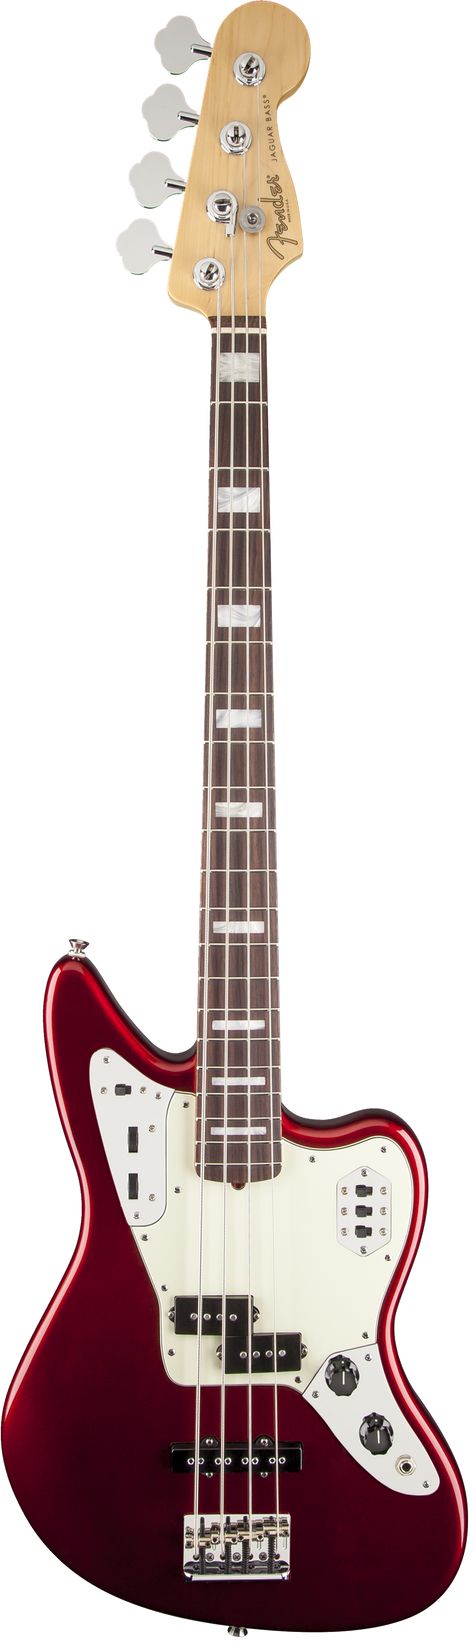 Fender American Standard Jaguar Bass Jaguar Bass Guitar, Hot Apples, Guitar Finishing, Music Things, Fender Jaguar, Guitar Gear, Fender Bass, Fender American, Fender Bass Guitar